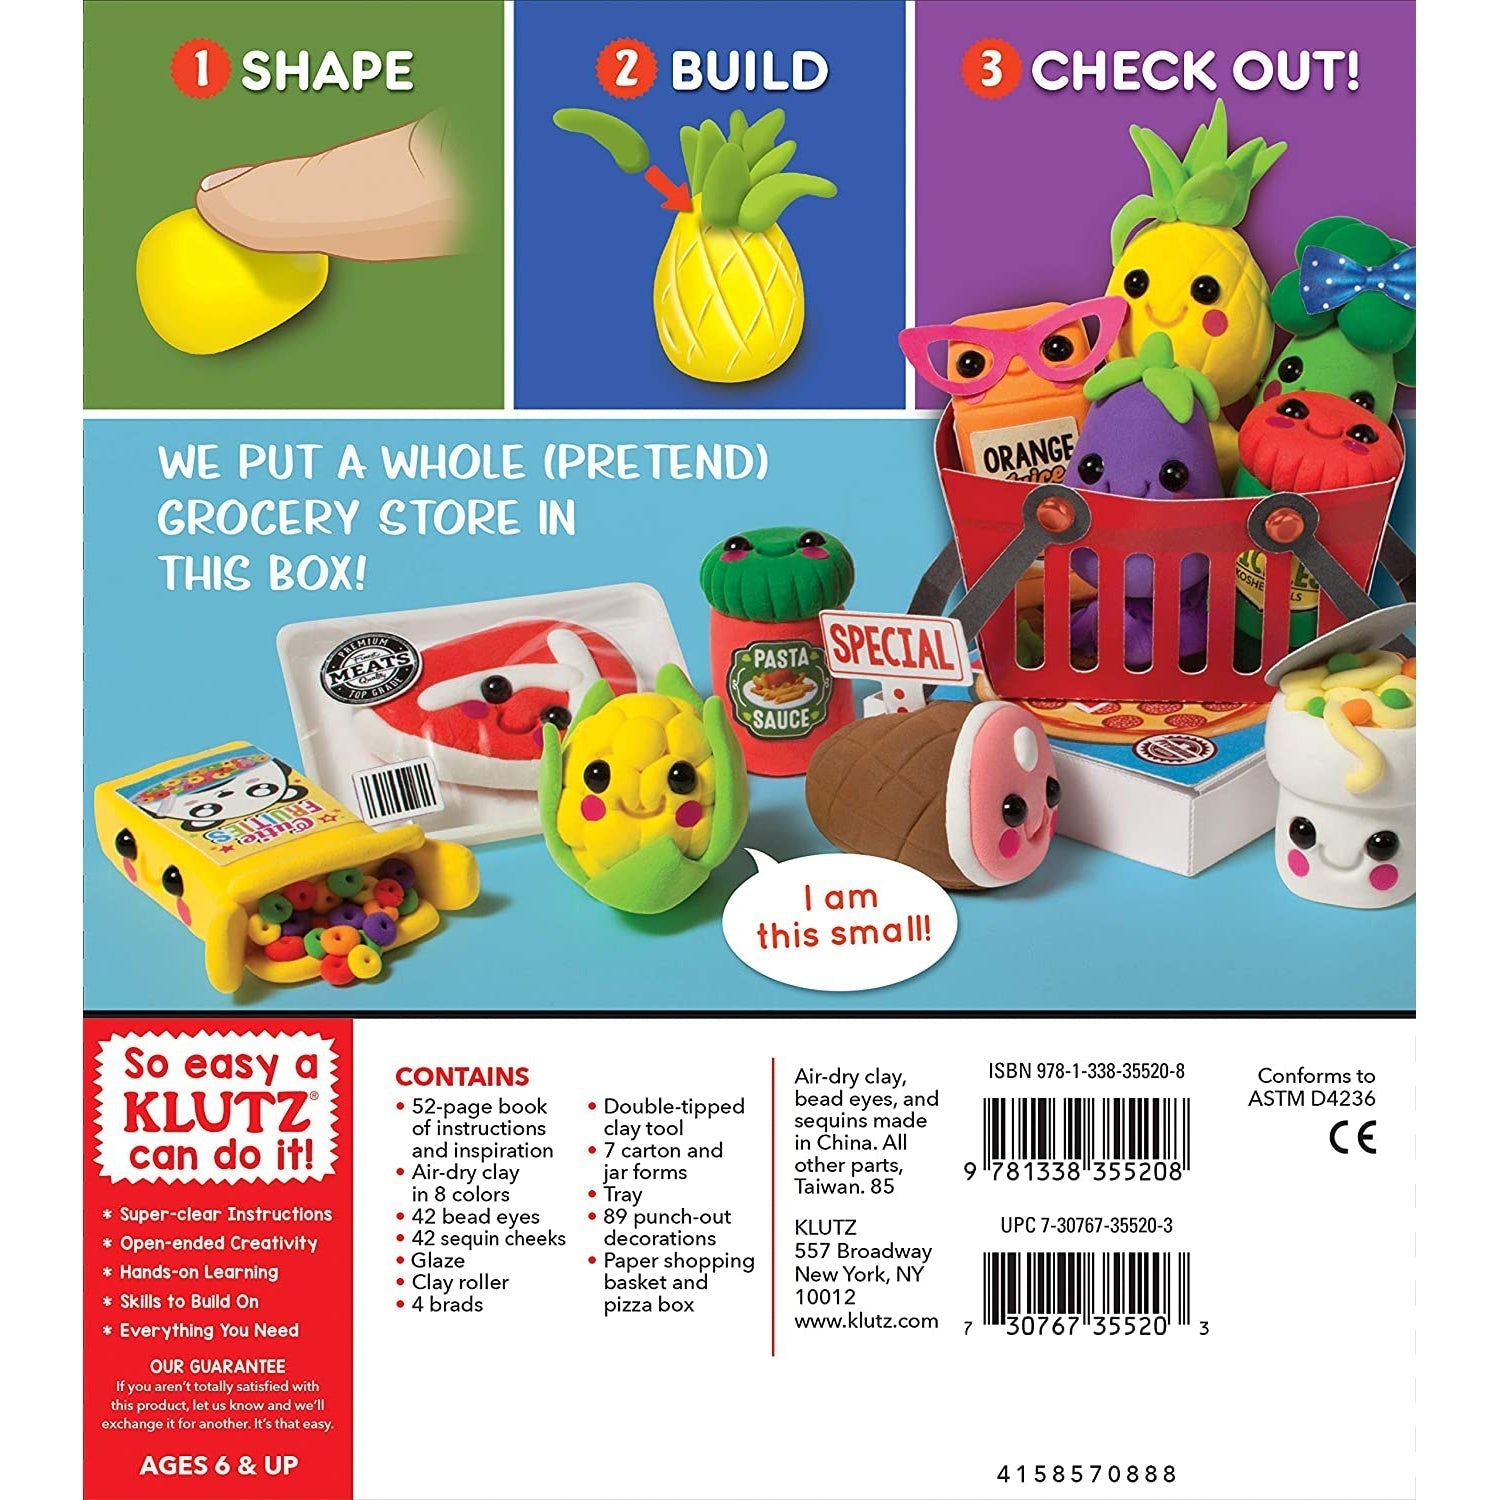 Kids Review: Klutz Craft Kits — Paper Heart Design